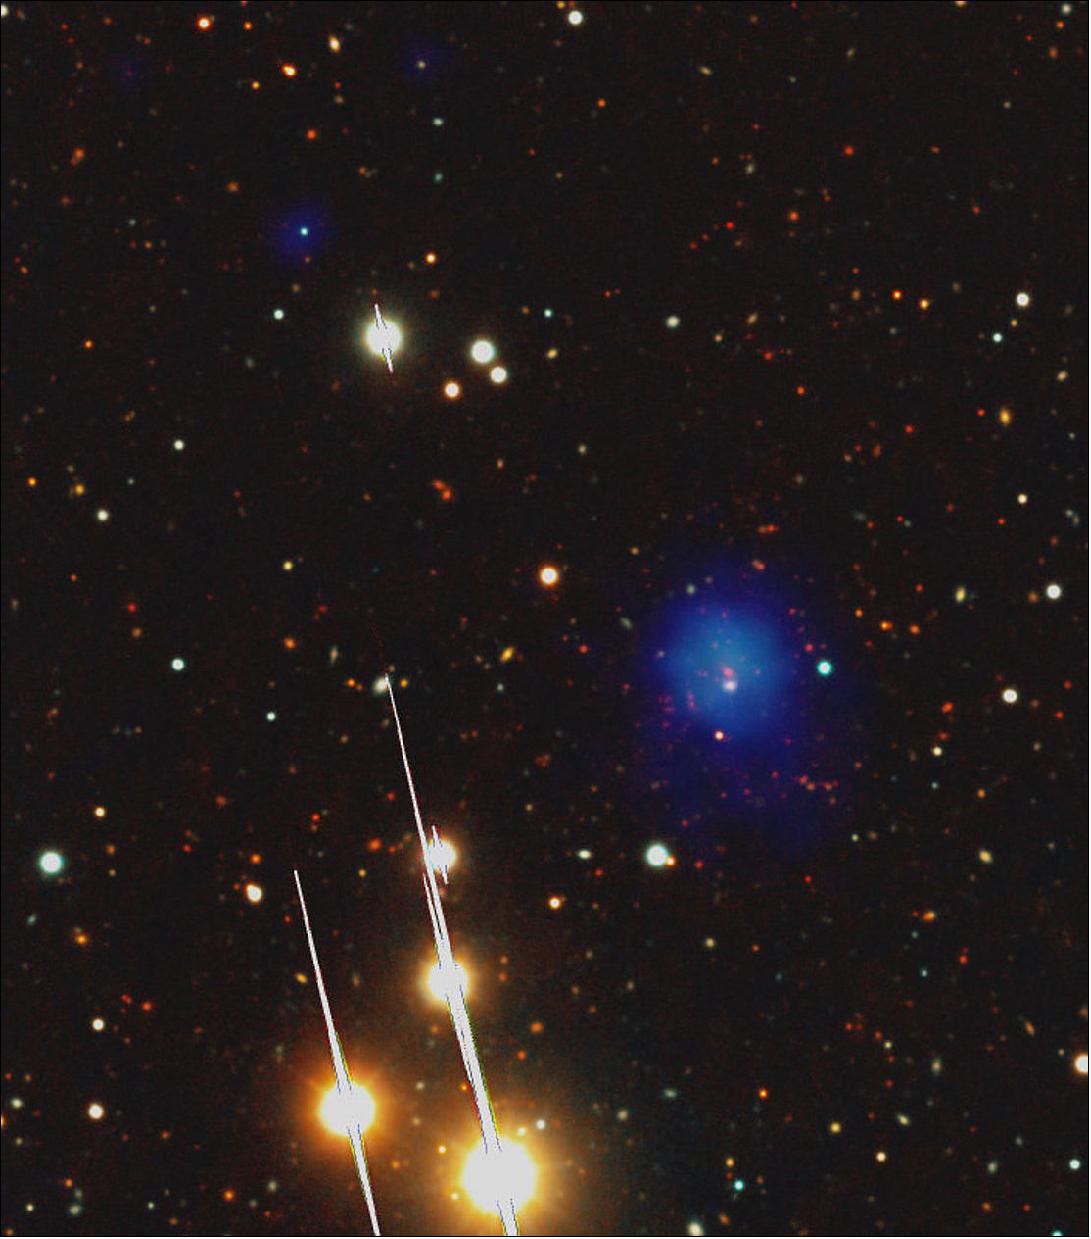 Figure 135: 2XMM J083026+524133 distant cluster of galaxies (image credit: ESA XMM-Newton/EPIC, LBT/LBC, AIP, J. Kohnert)